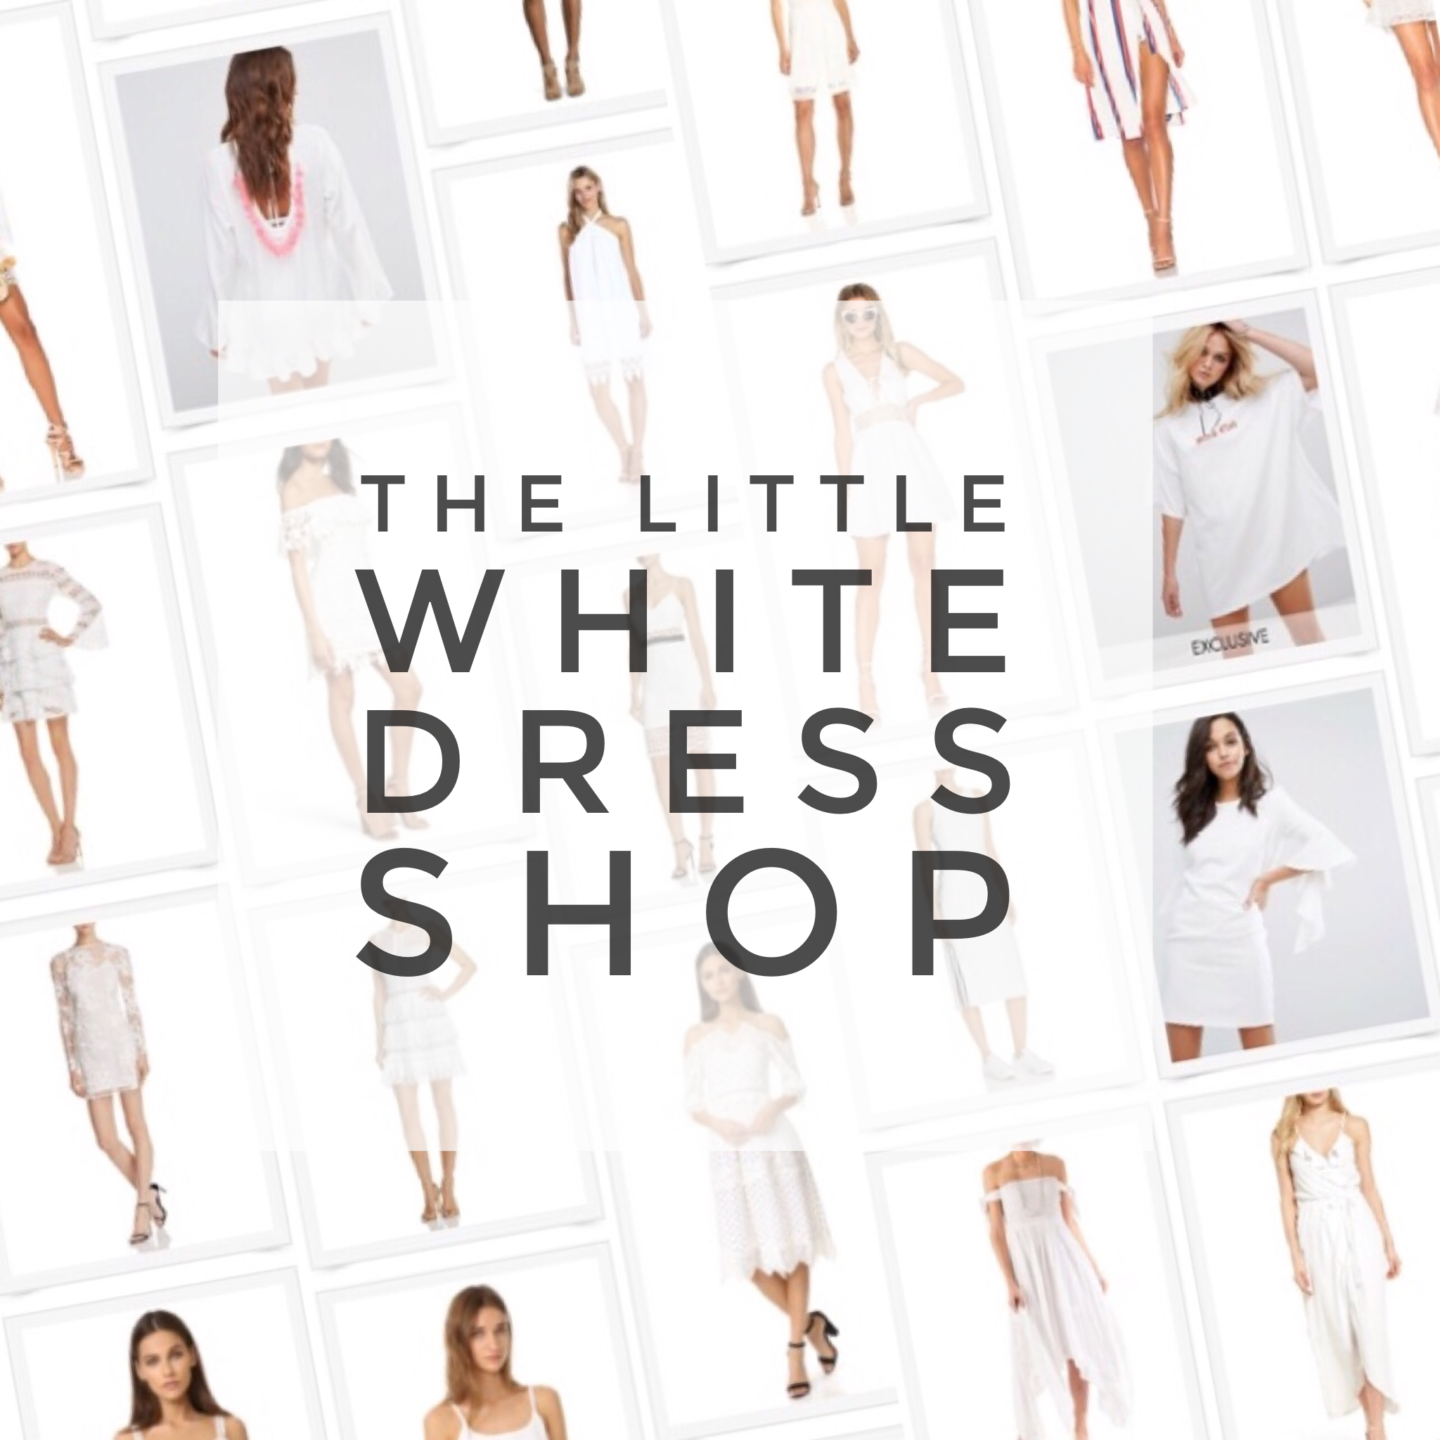 Little white dress shop